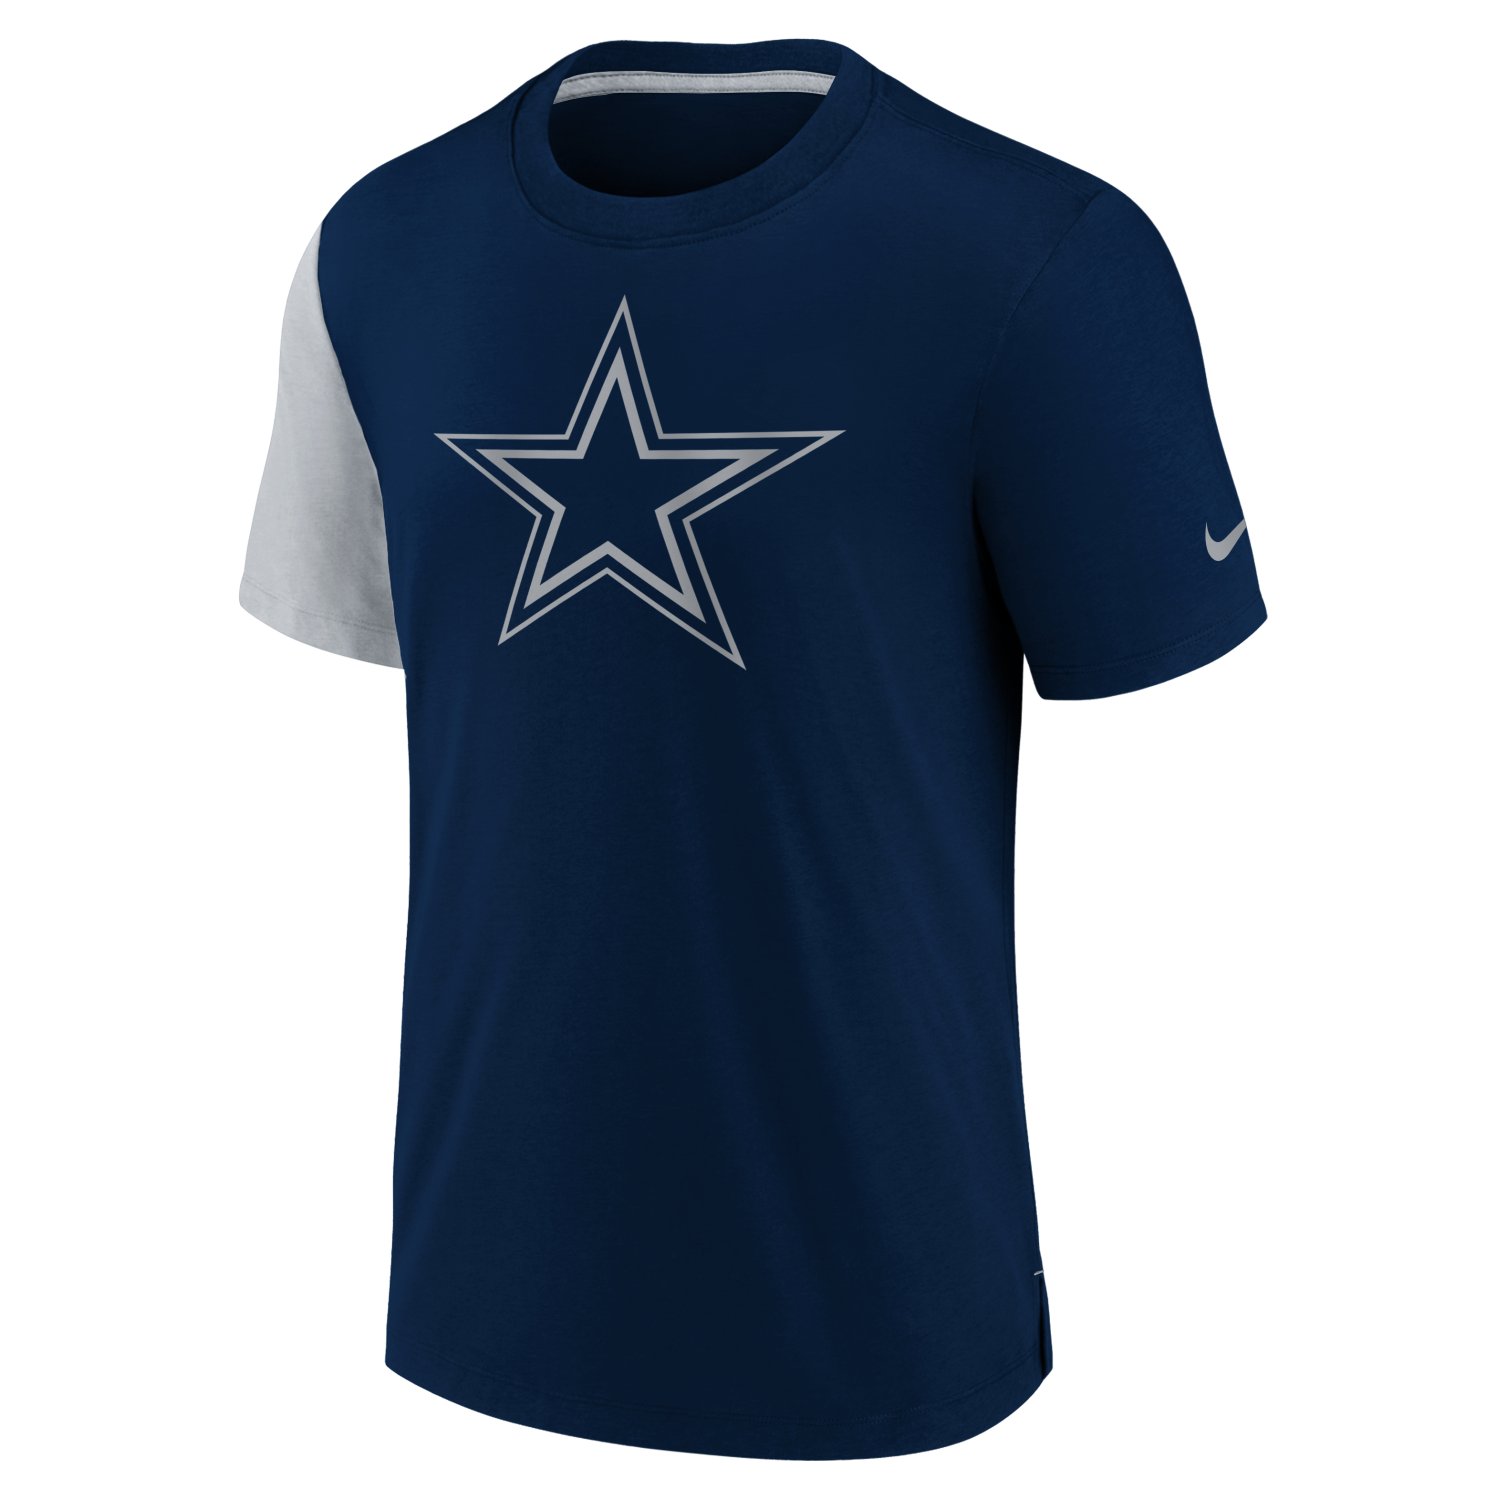 Nike NFL Fashion Kinder Shirt - Dallas Cowboys | Kinder | Bekleidung ...